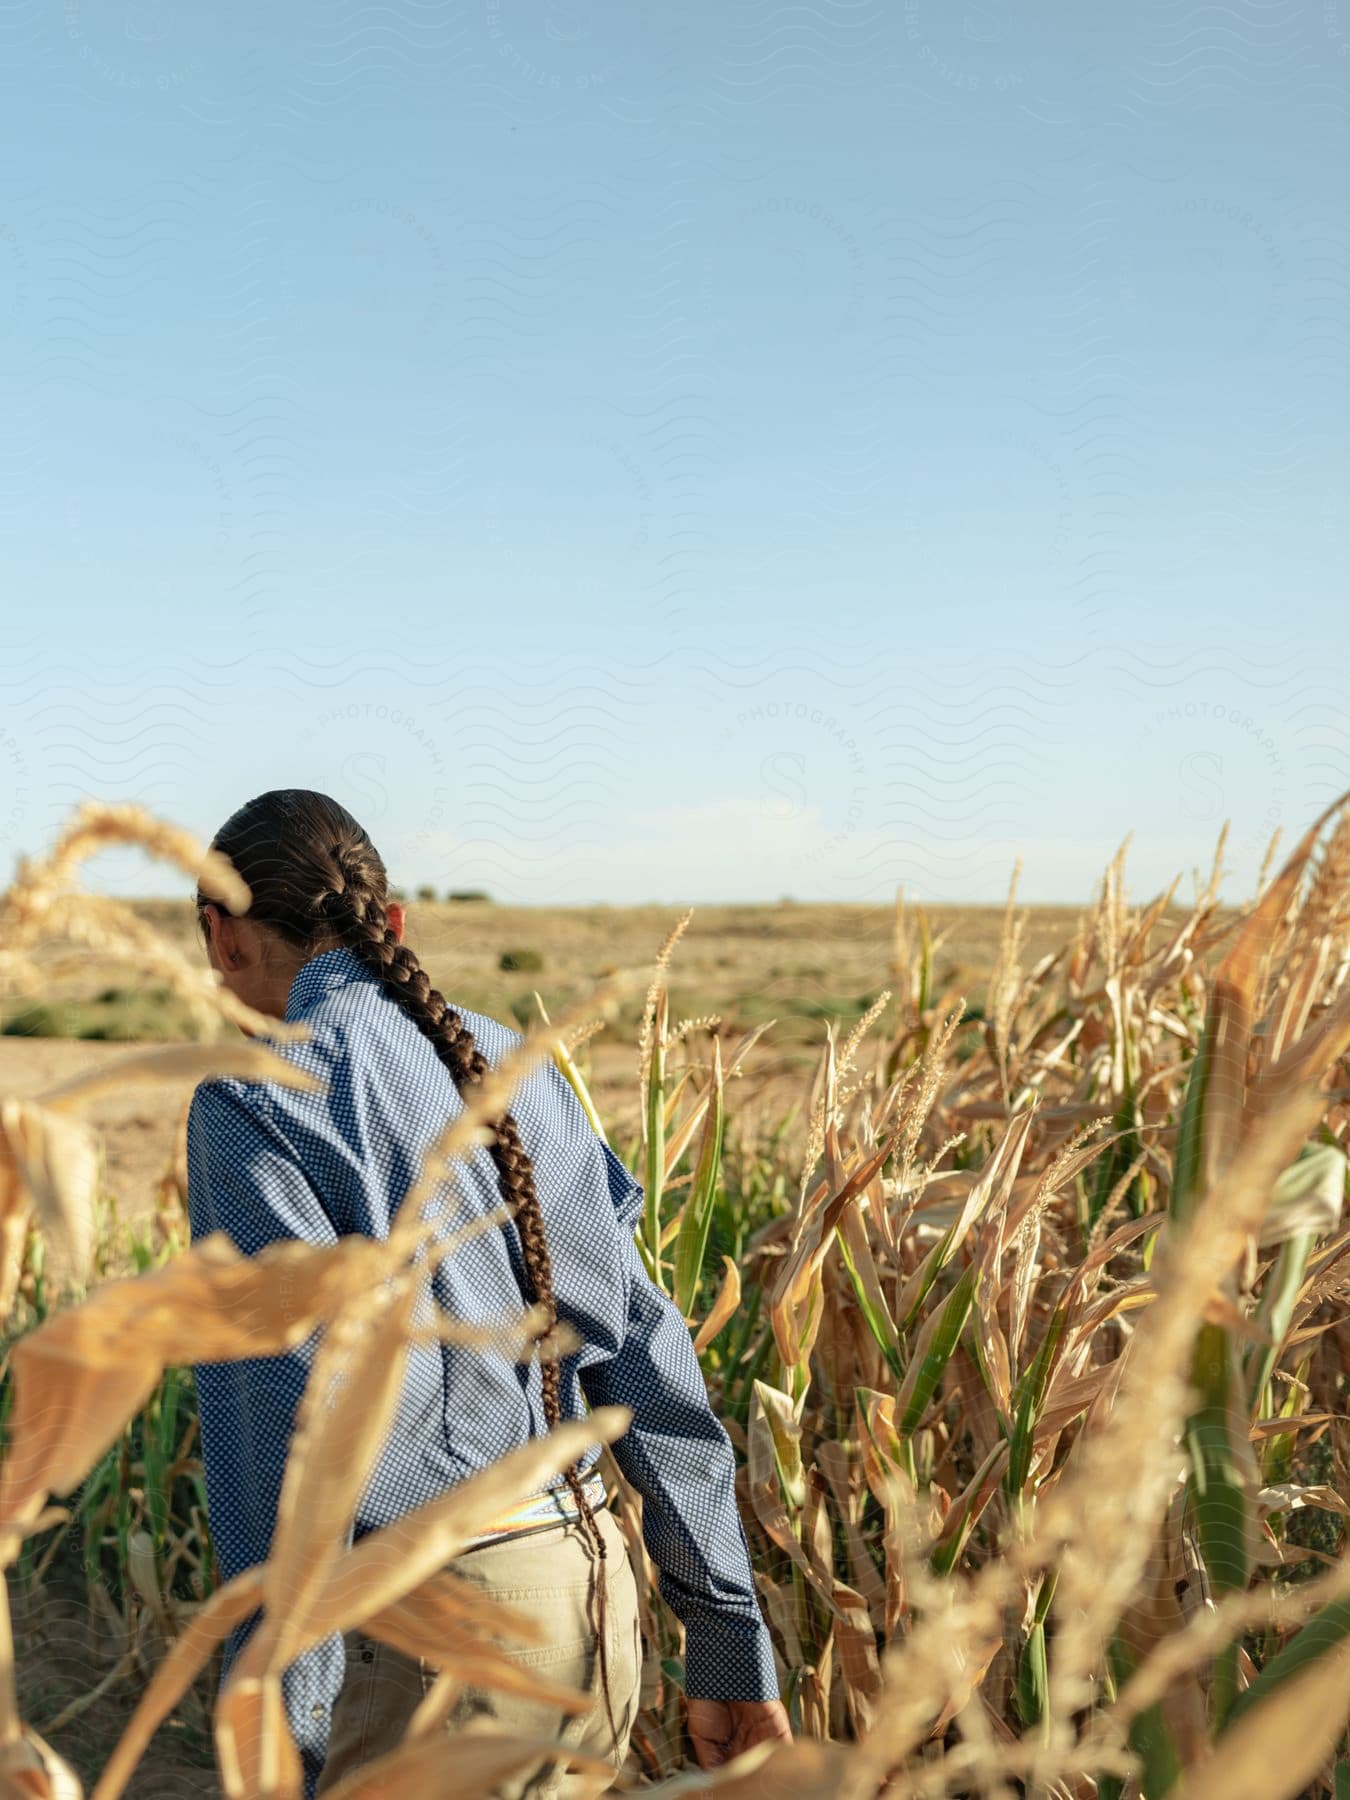 Stock photo of a woman walking in a wheat field